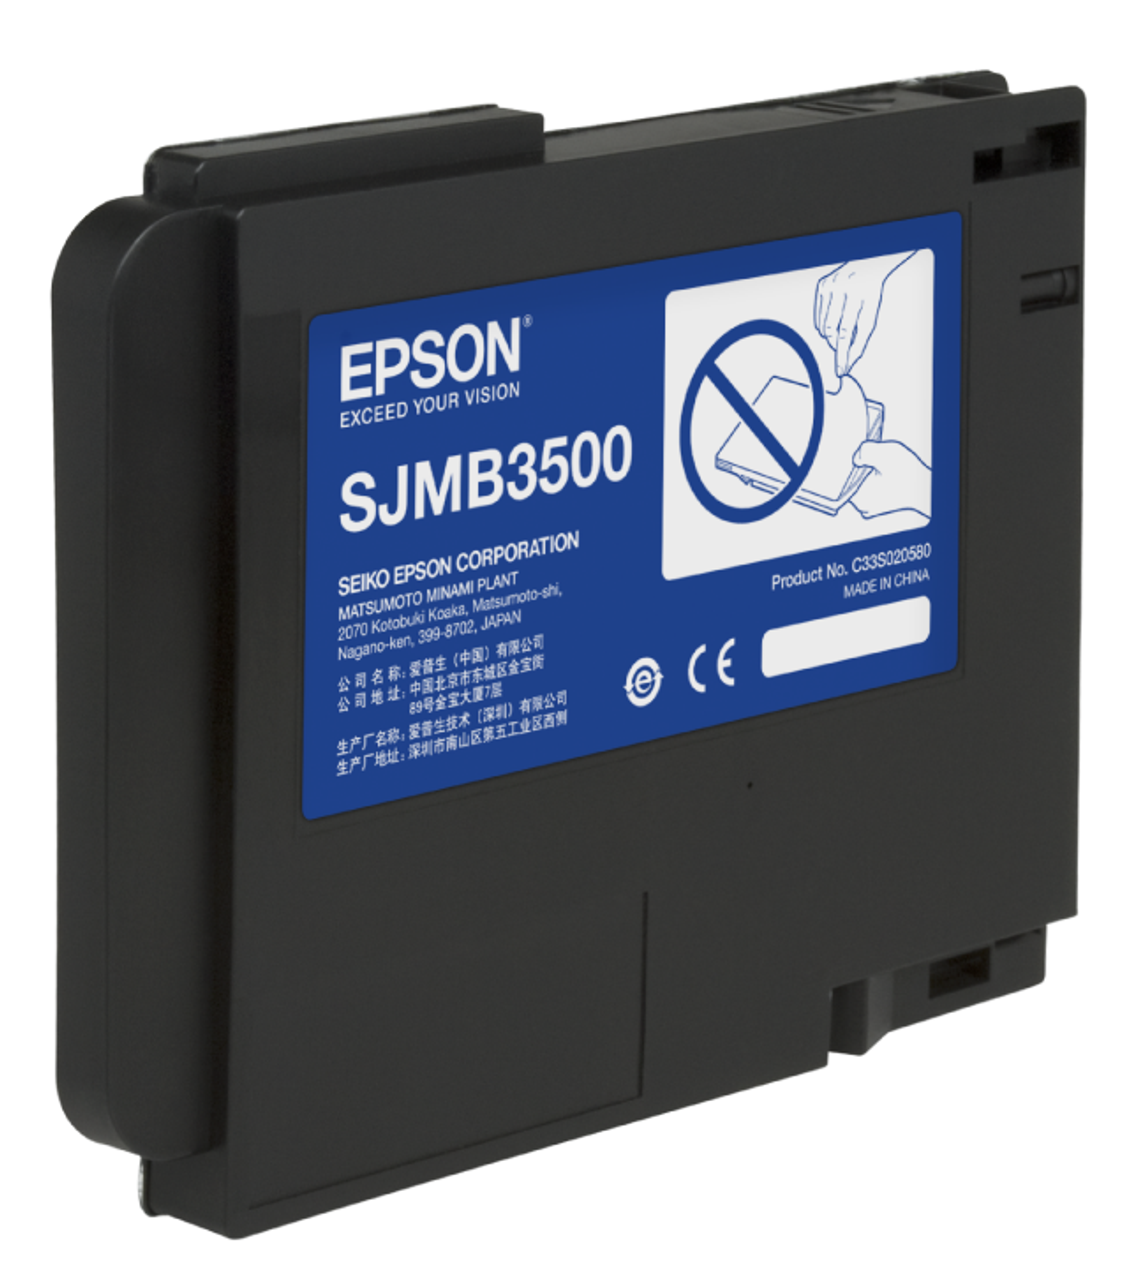 Epson tm c3500 label software